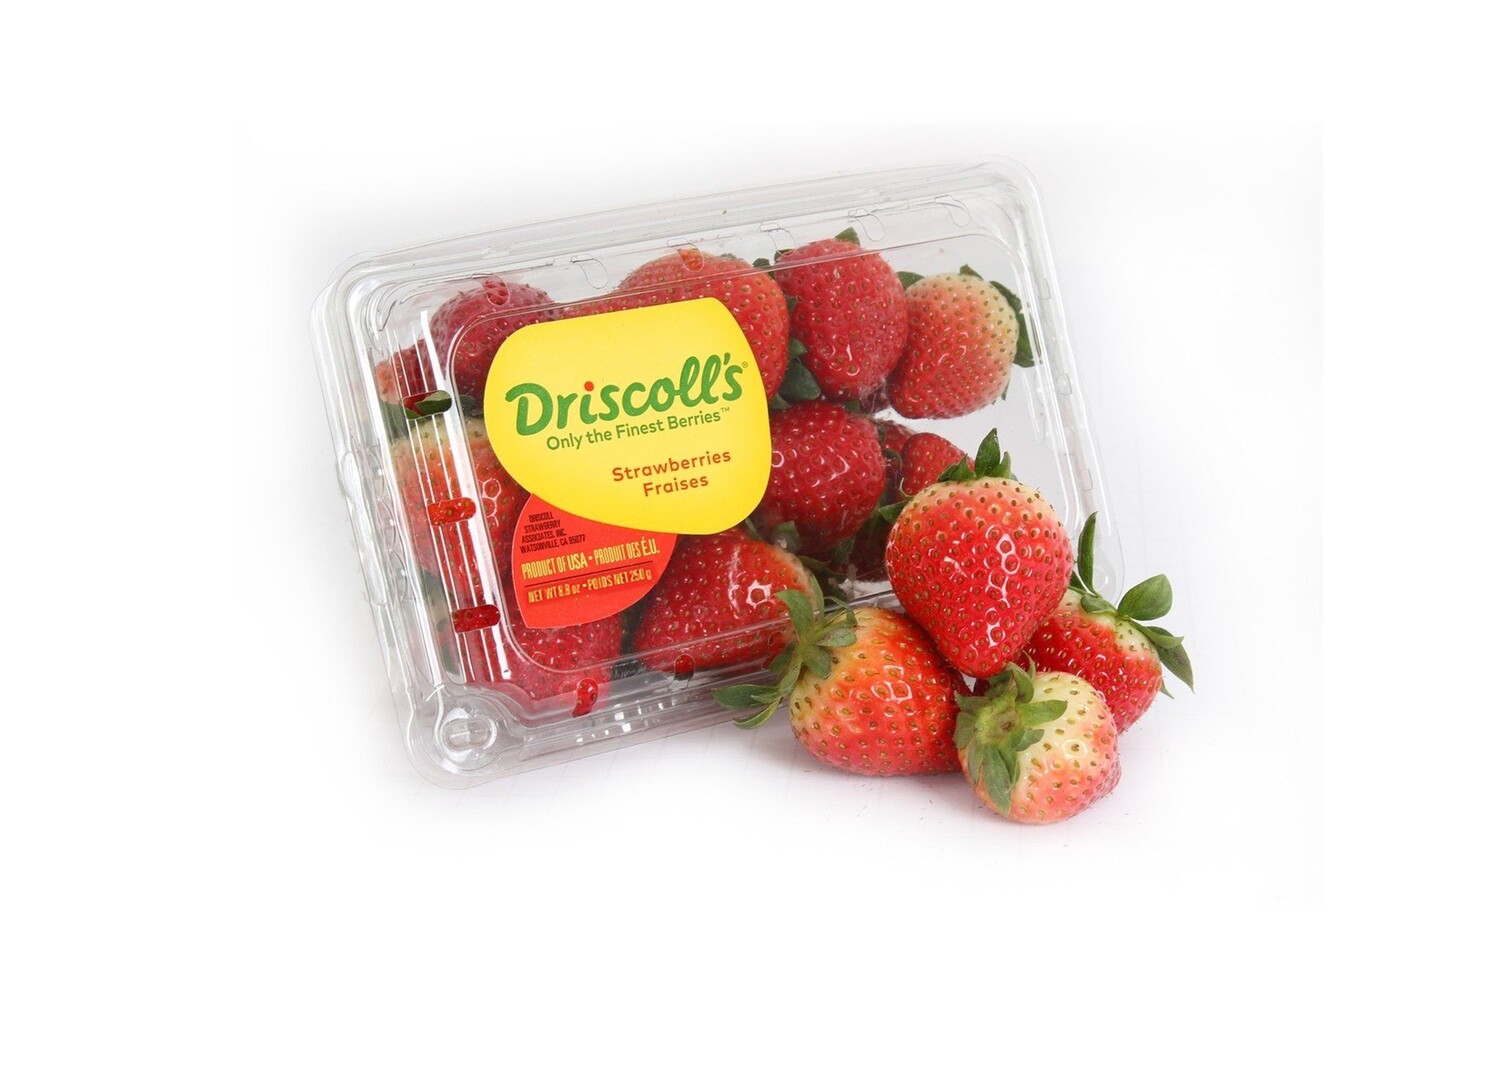 Driscoll's Strawberries فراوله "فريز" امريكيه